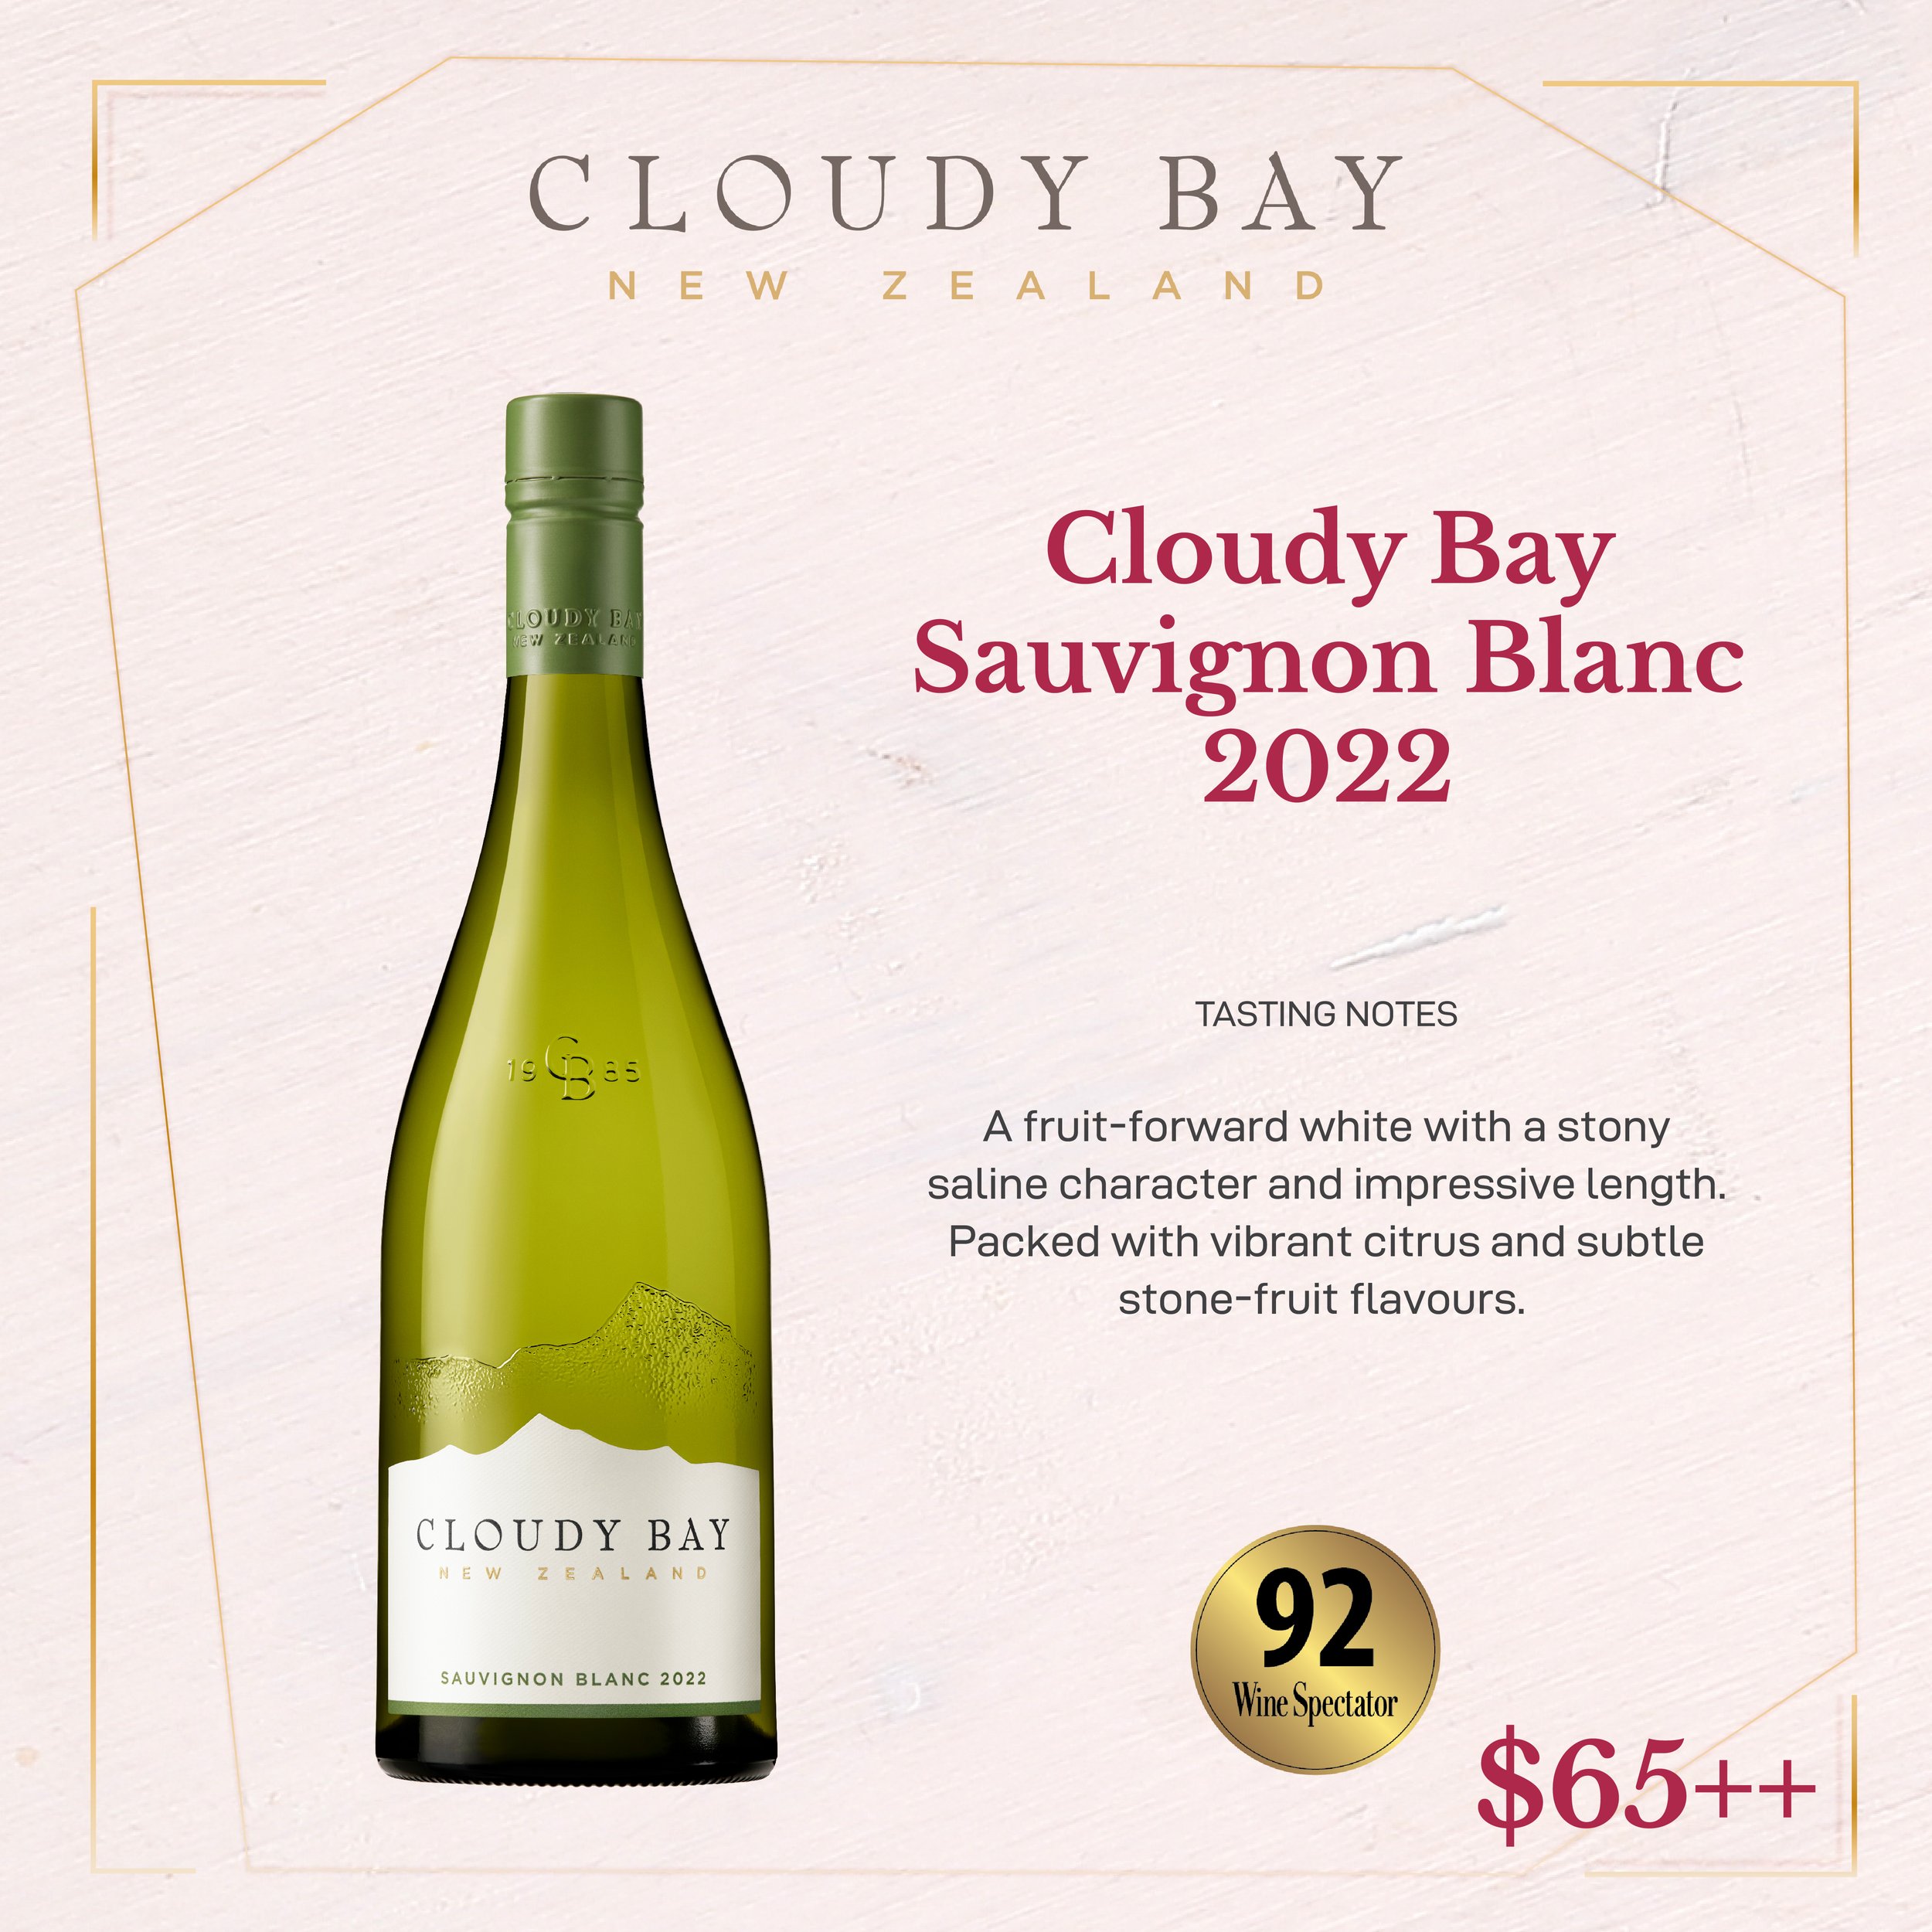 Cloudy Bay Te Koko: A Truly Unique Sauvignon Blanc